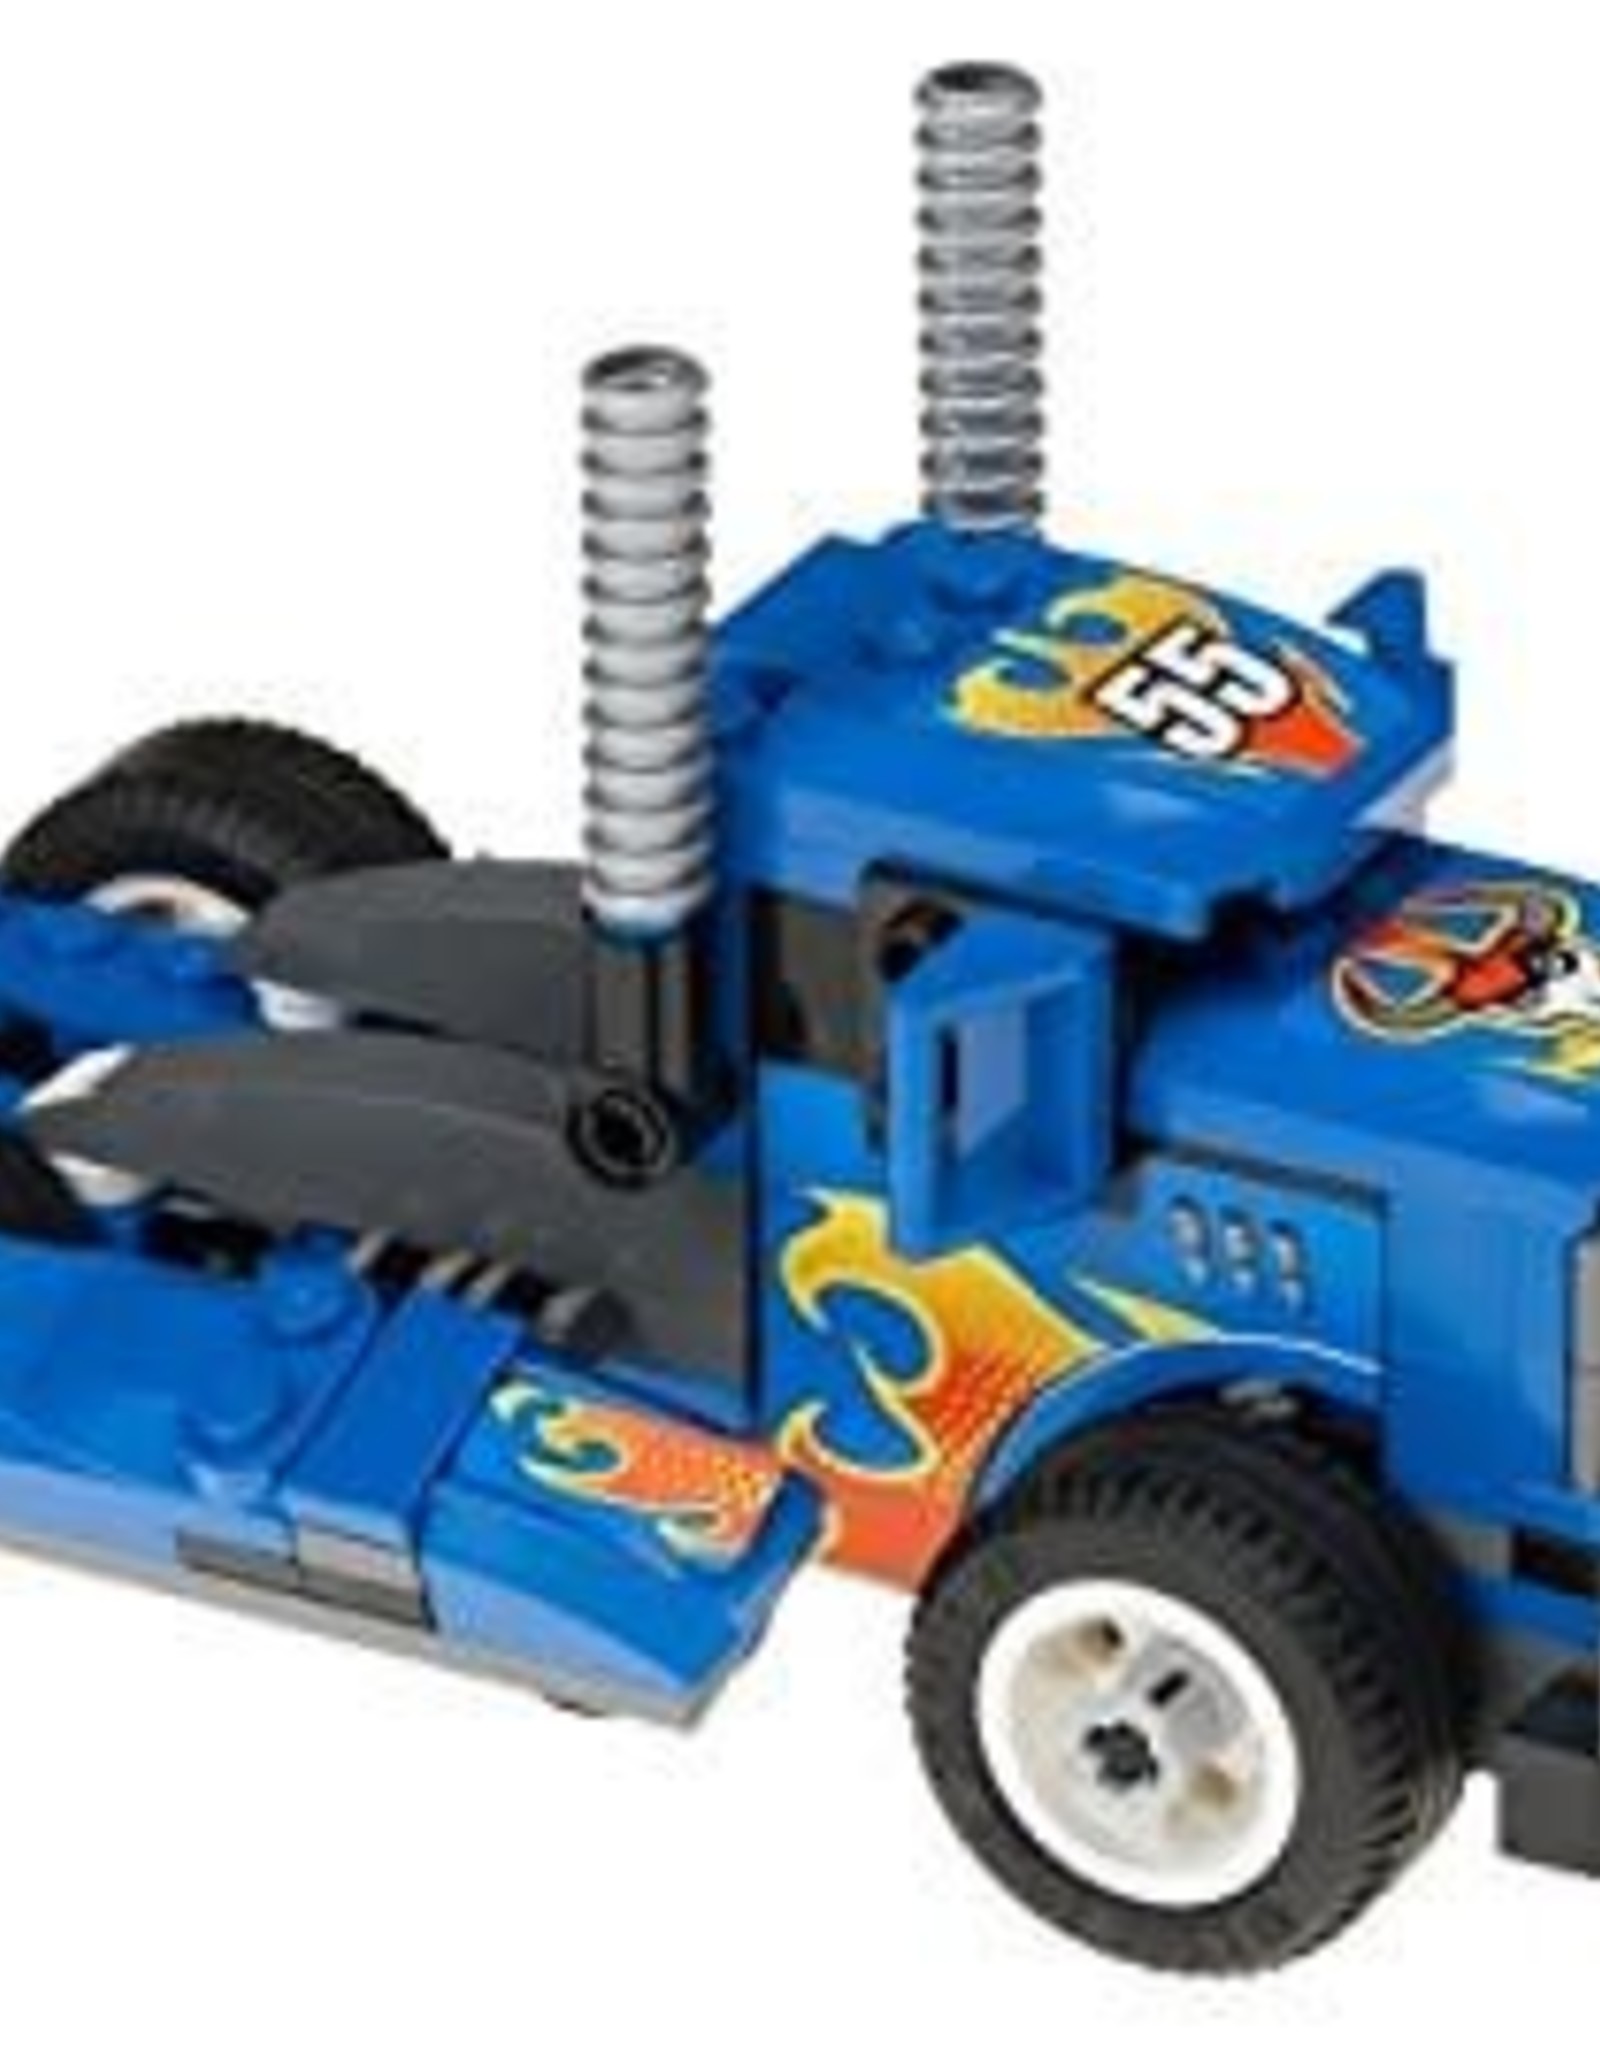 LEGO LEGO 8668 Slide Rider  RACERS